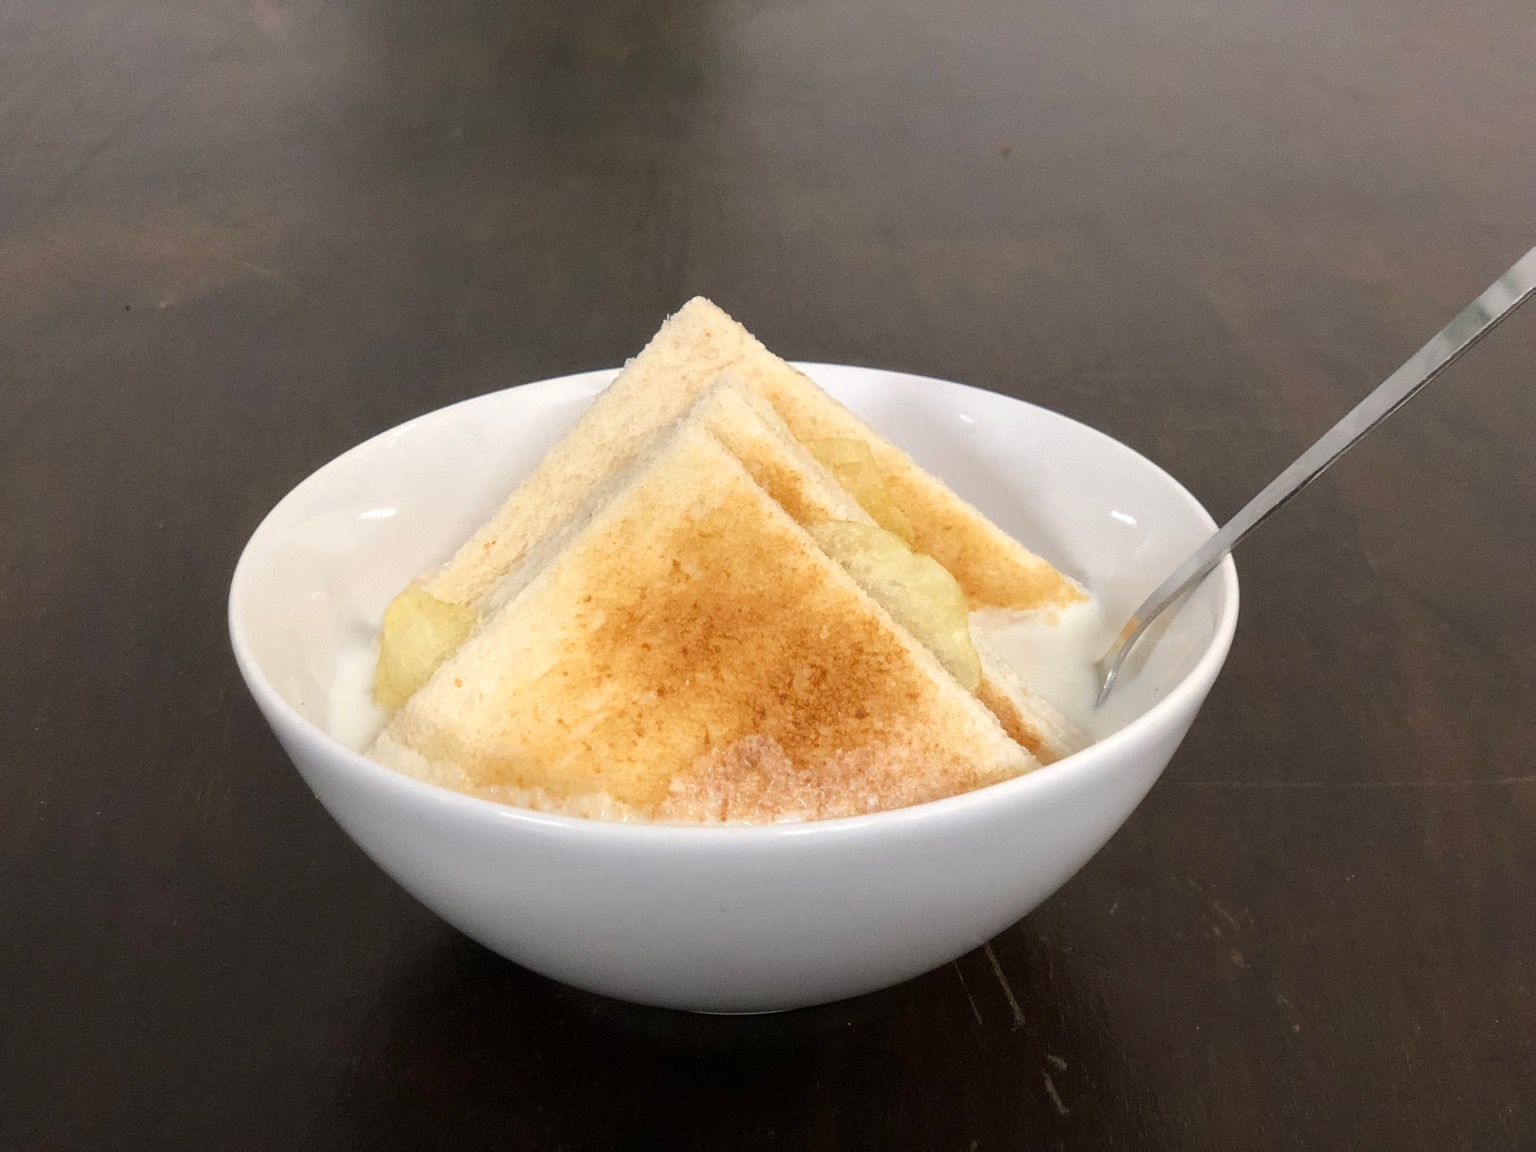 Toasted crustless crisp sandwich in milk